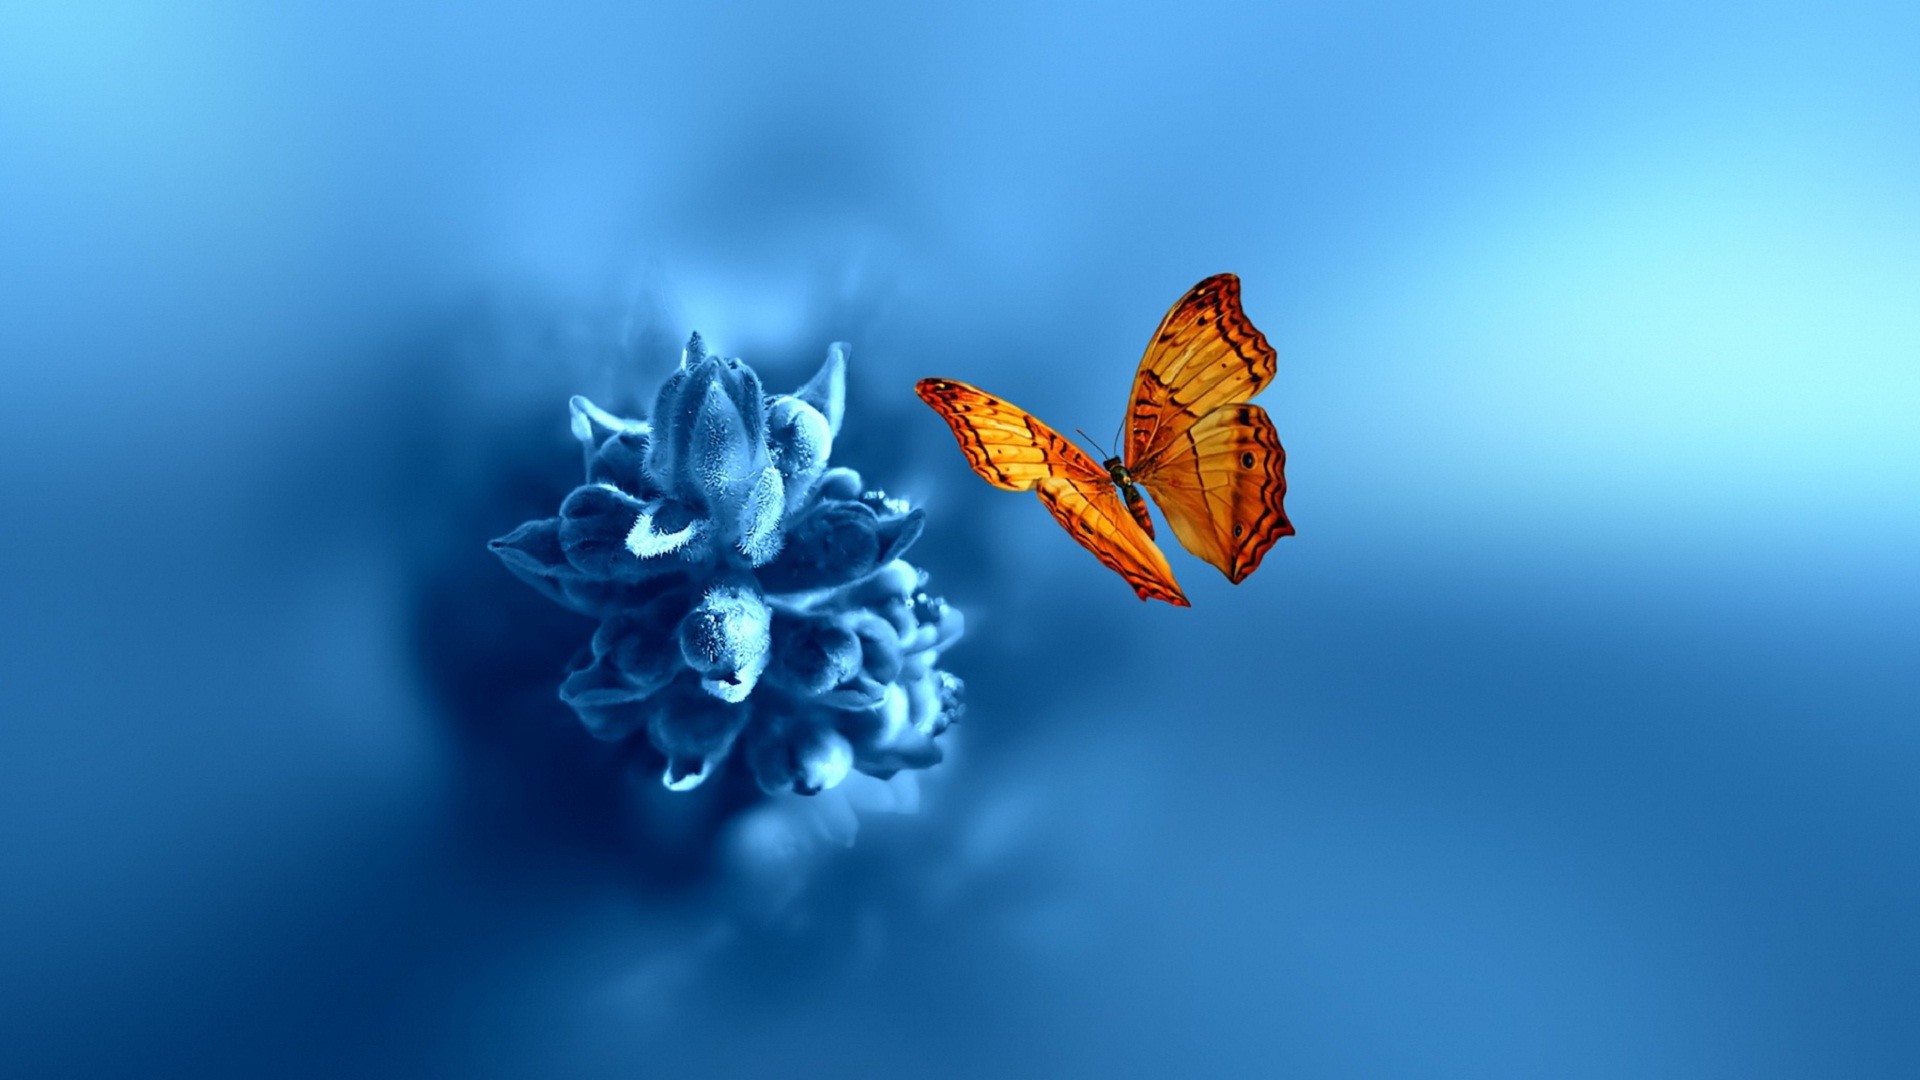 1920x1080 Fantastic butterfly desktop background wallpapers